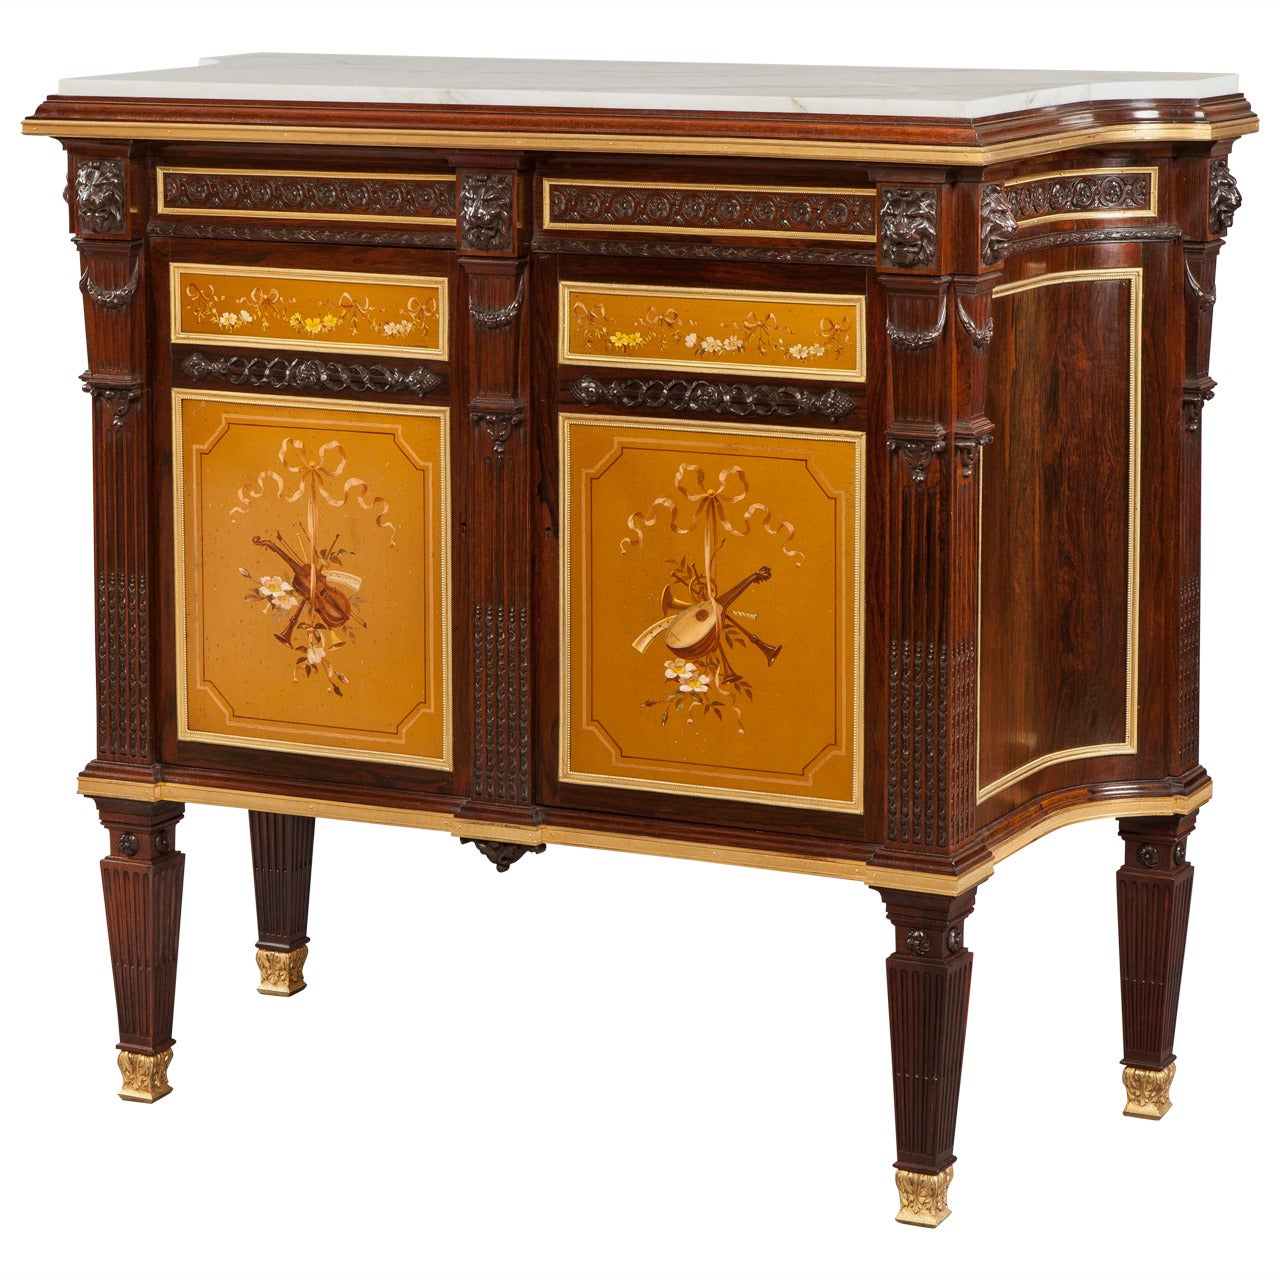 19th Century English Gold Polychrome Paneled Side Cabinet